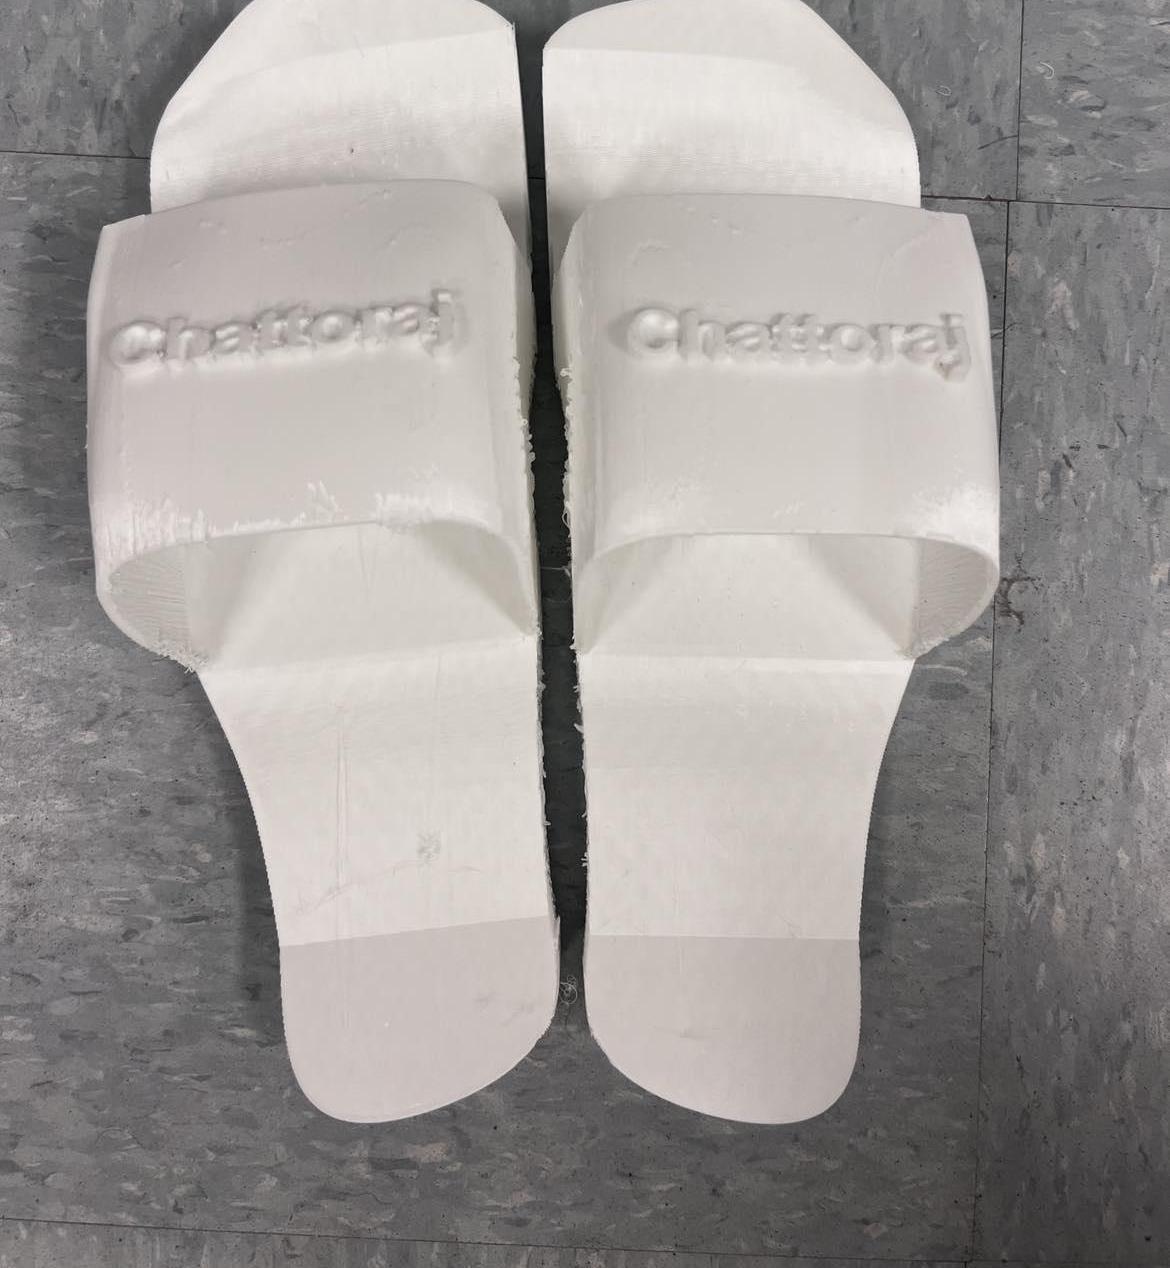 Final: 3D-Printed Sandals